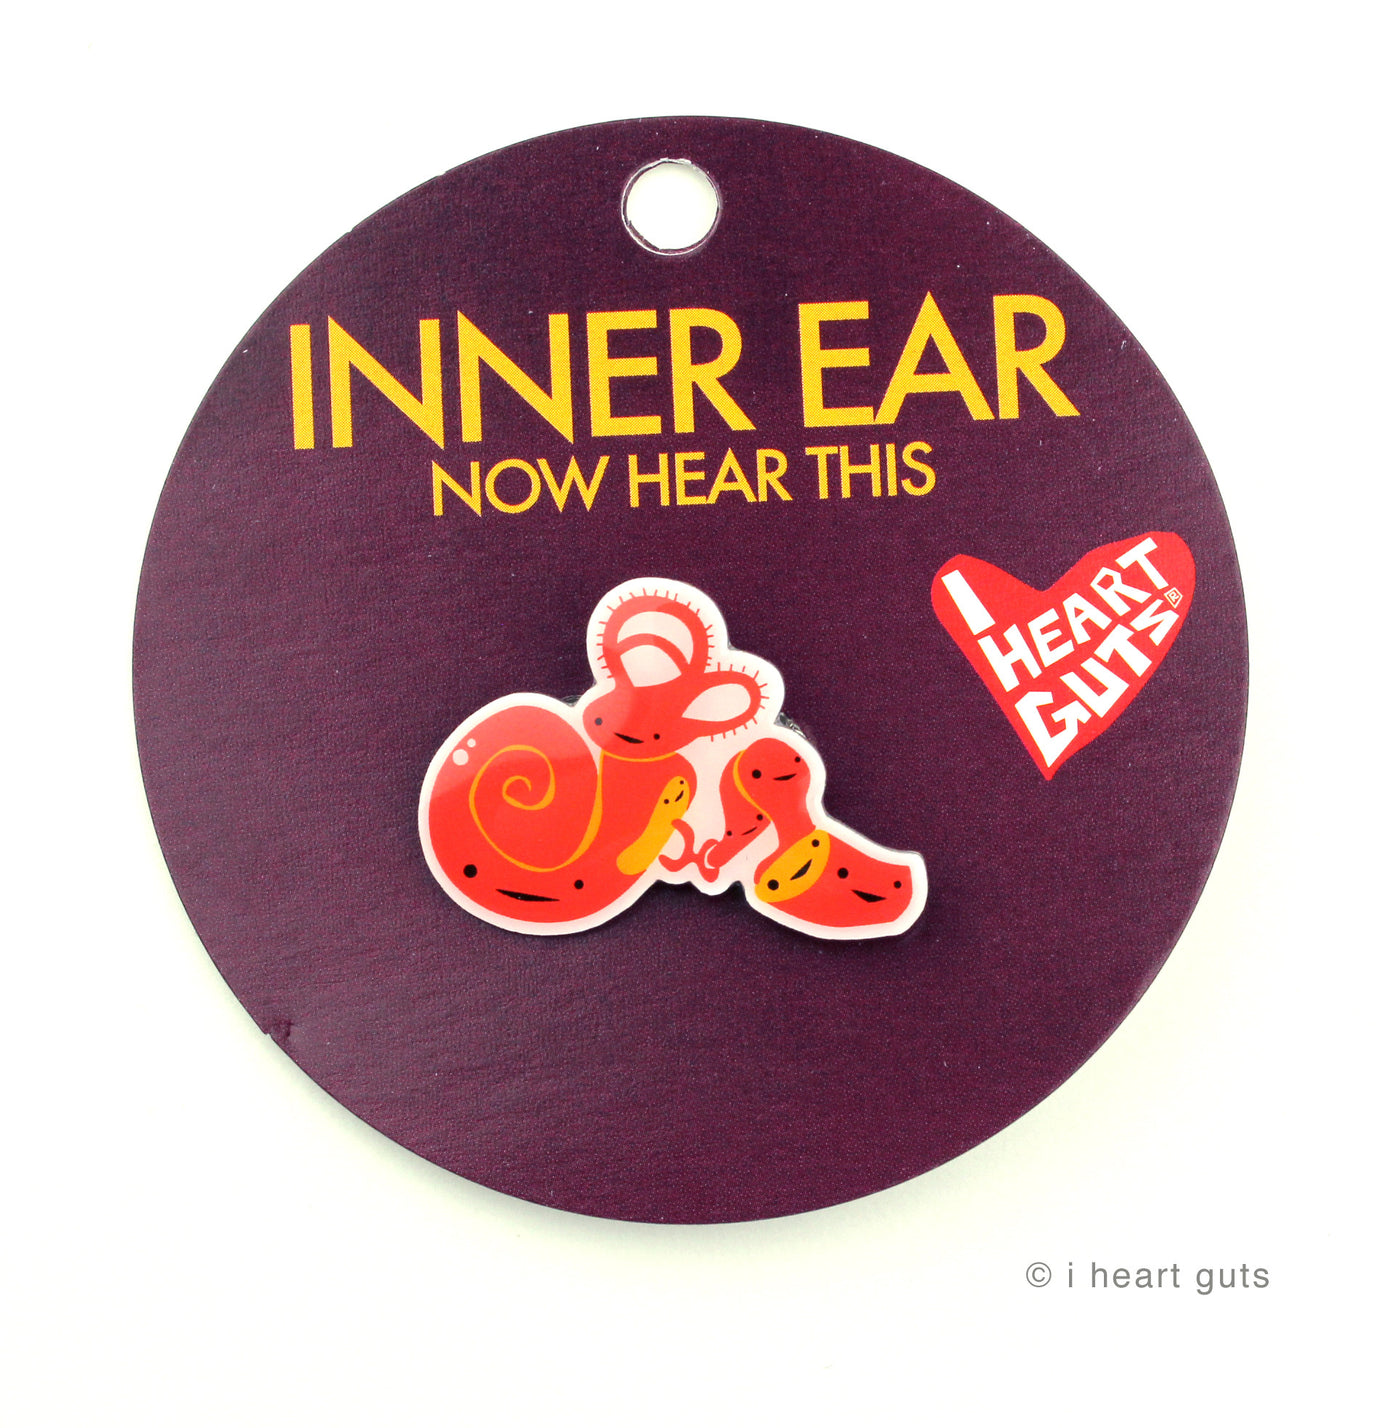 Inner Ear Lapel Pin - Ear Health & Audiology Pins - Cute Ear Doctor & ENT Pins